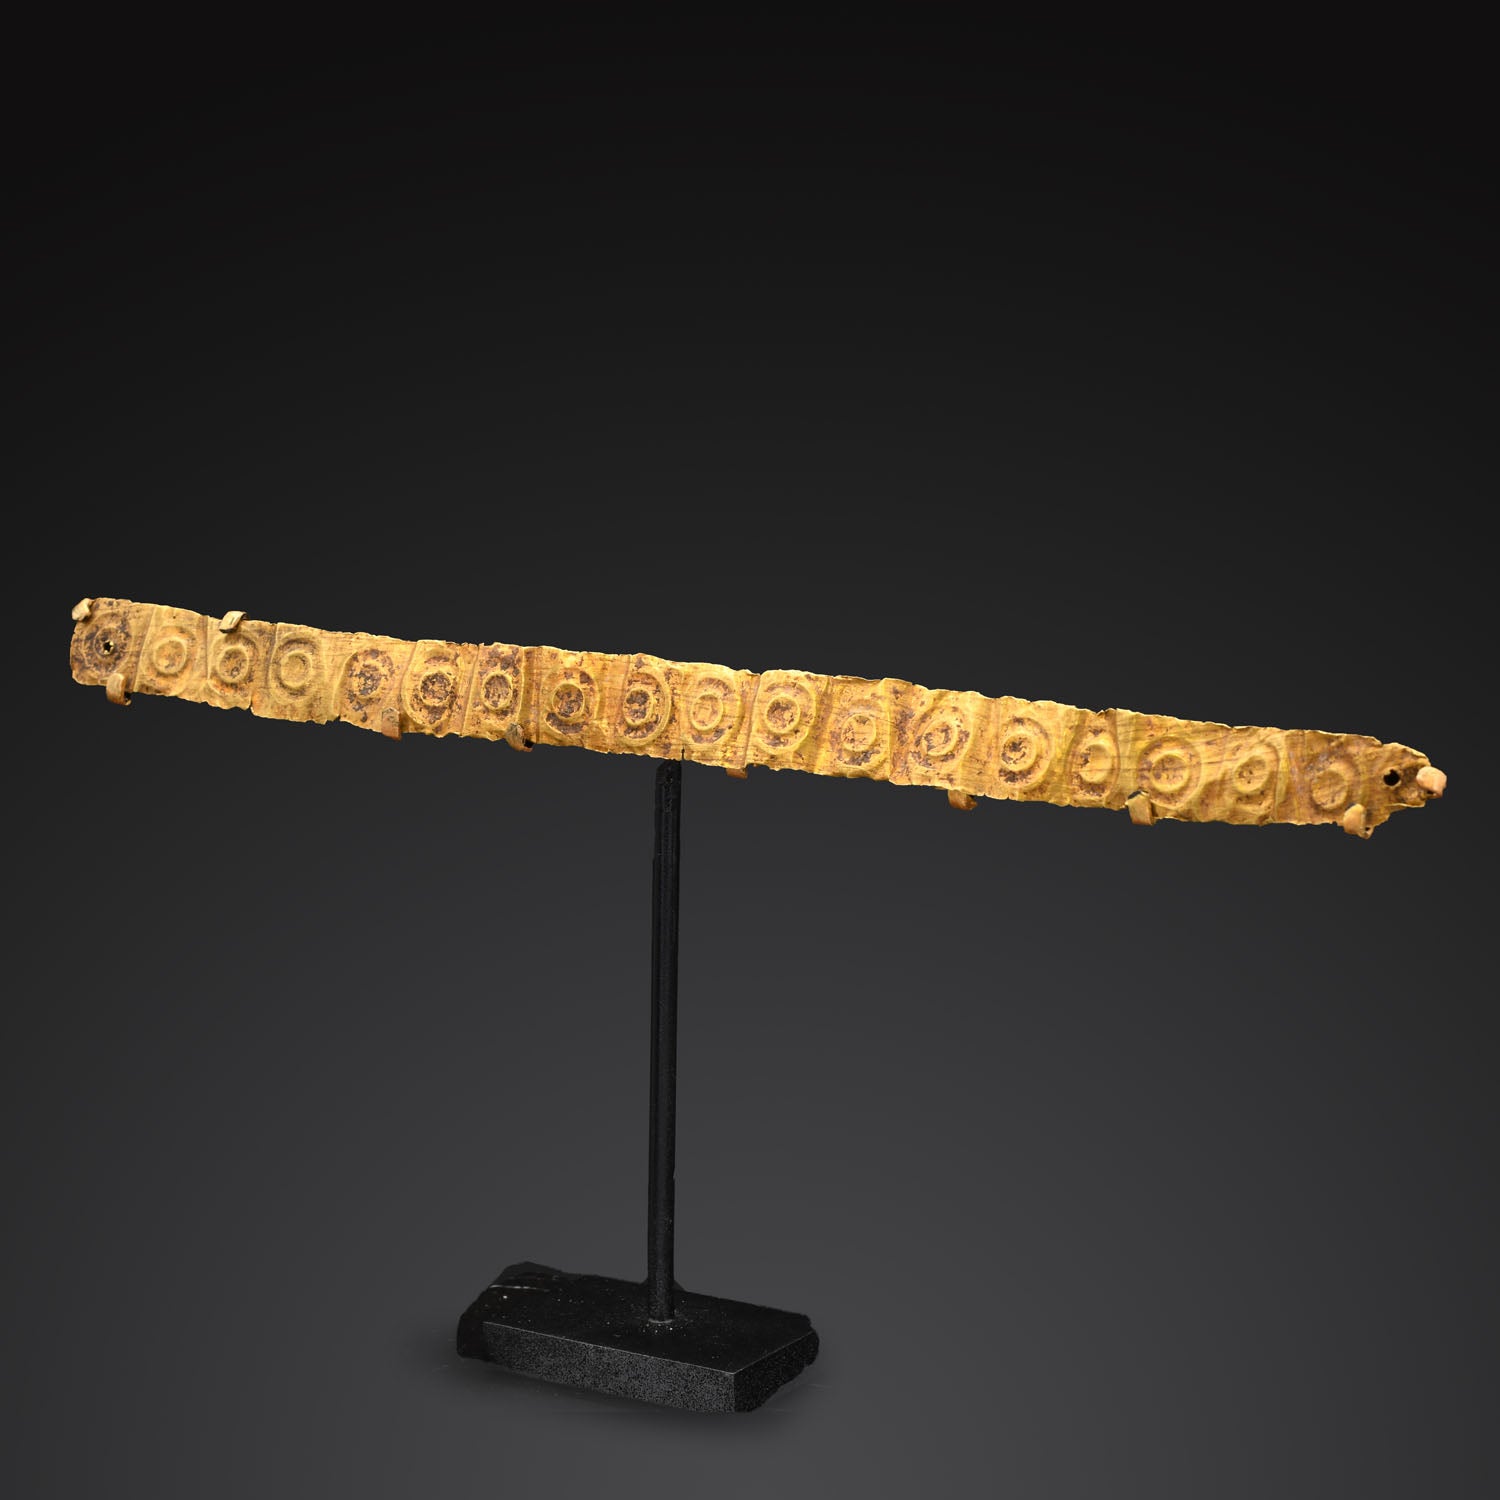 A Roman Gold Diadem, Roman Imperial Period, ca. 2nd century CE